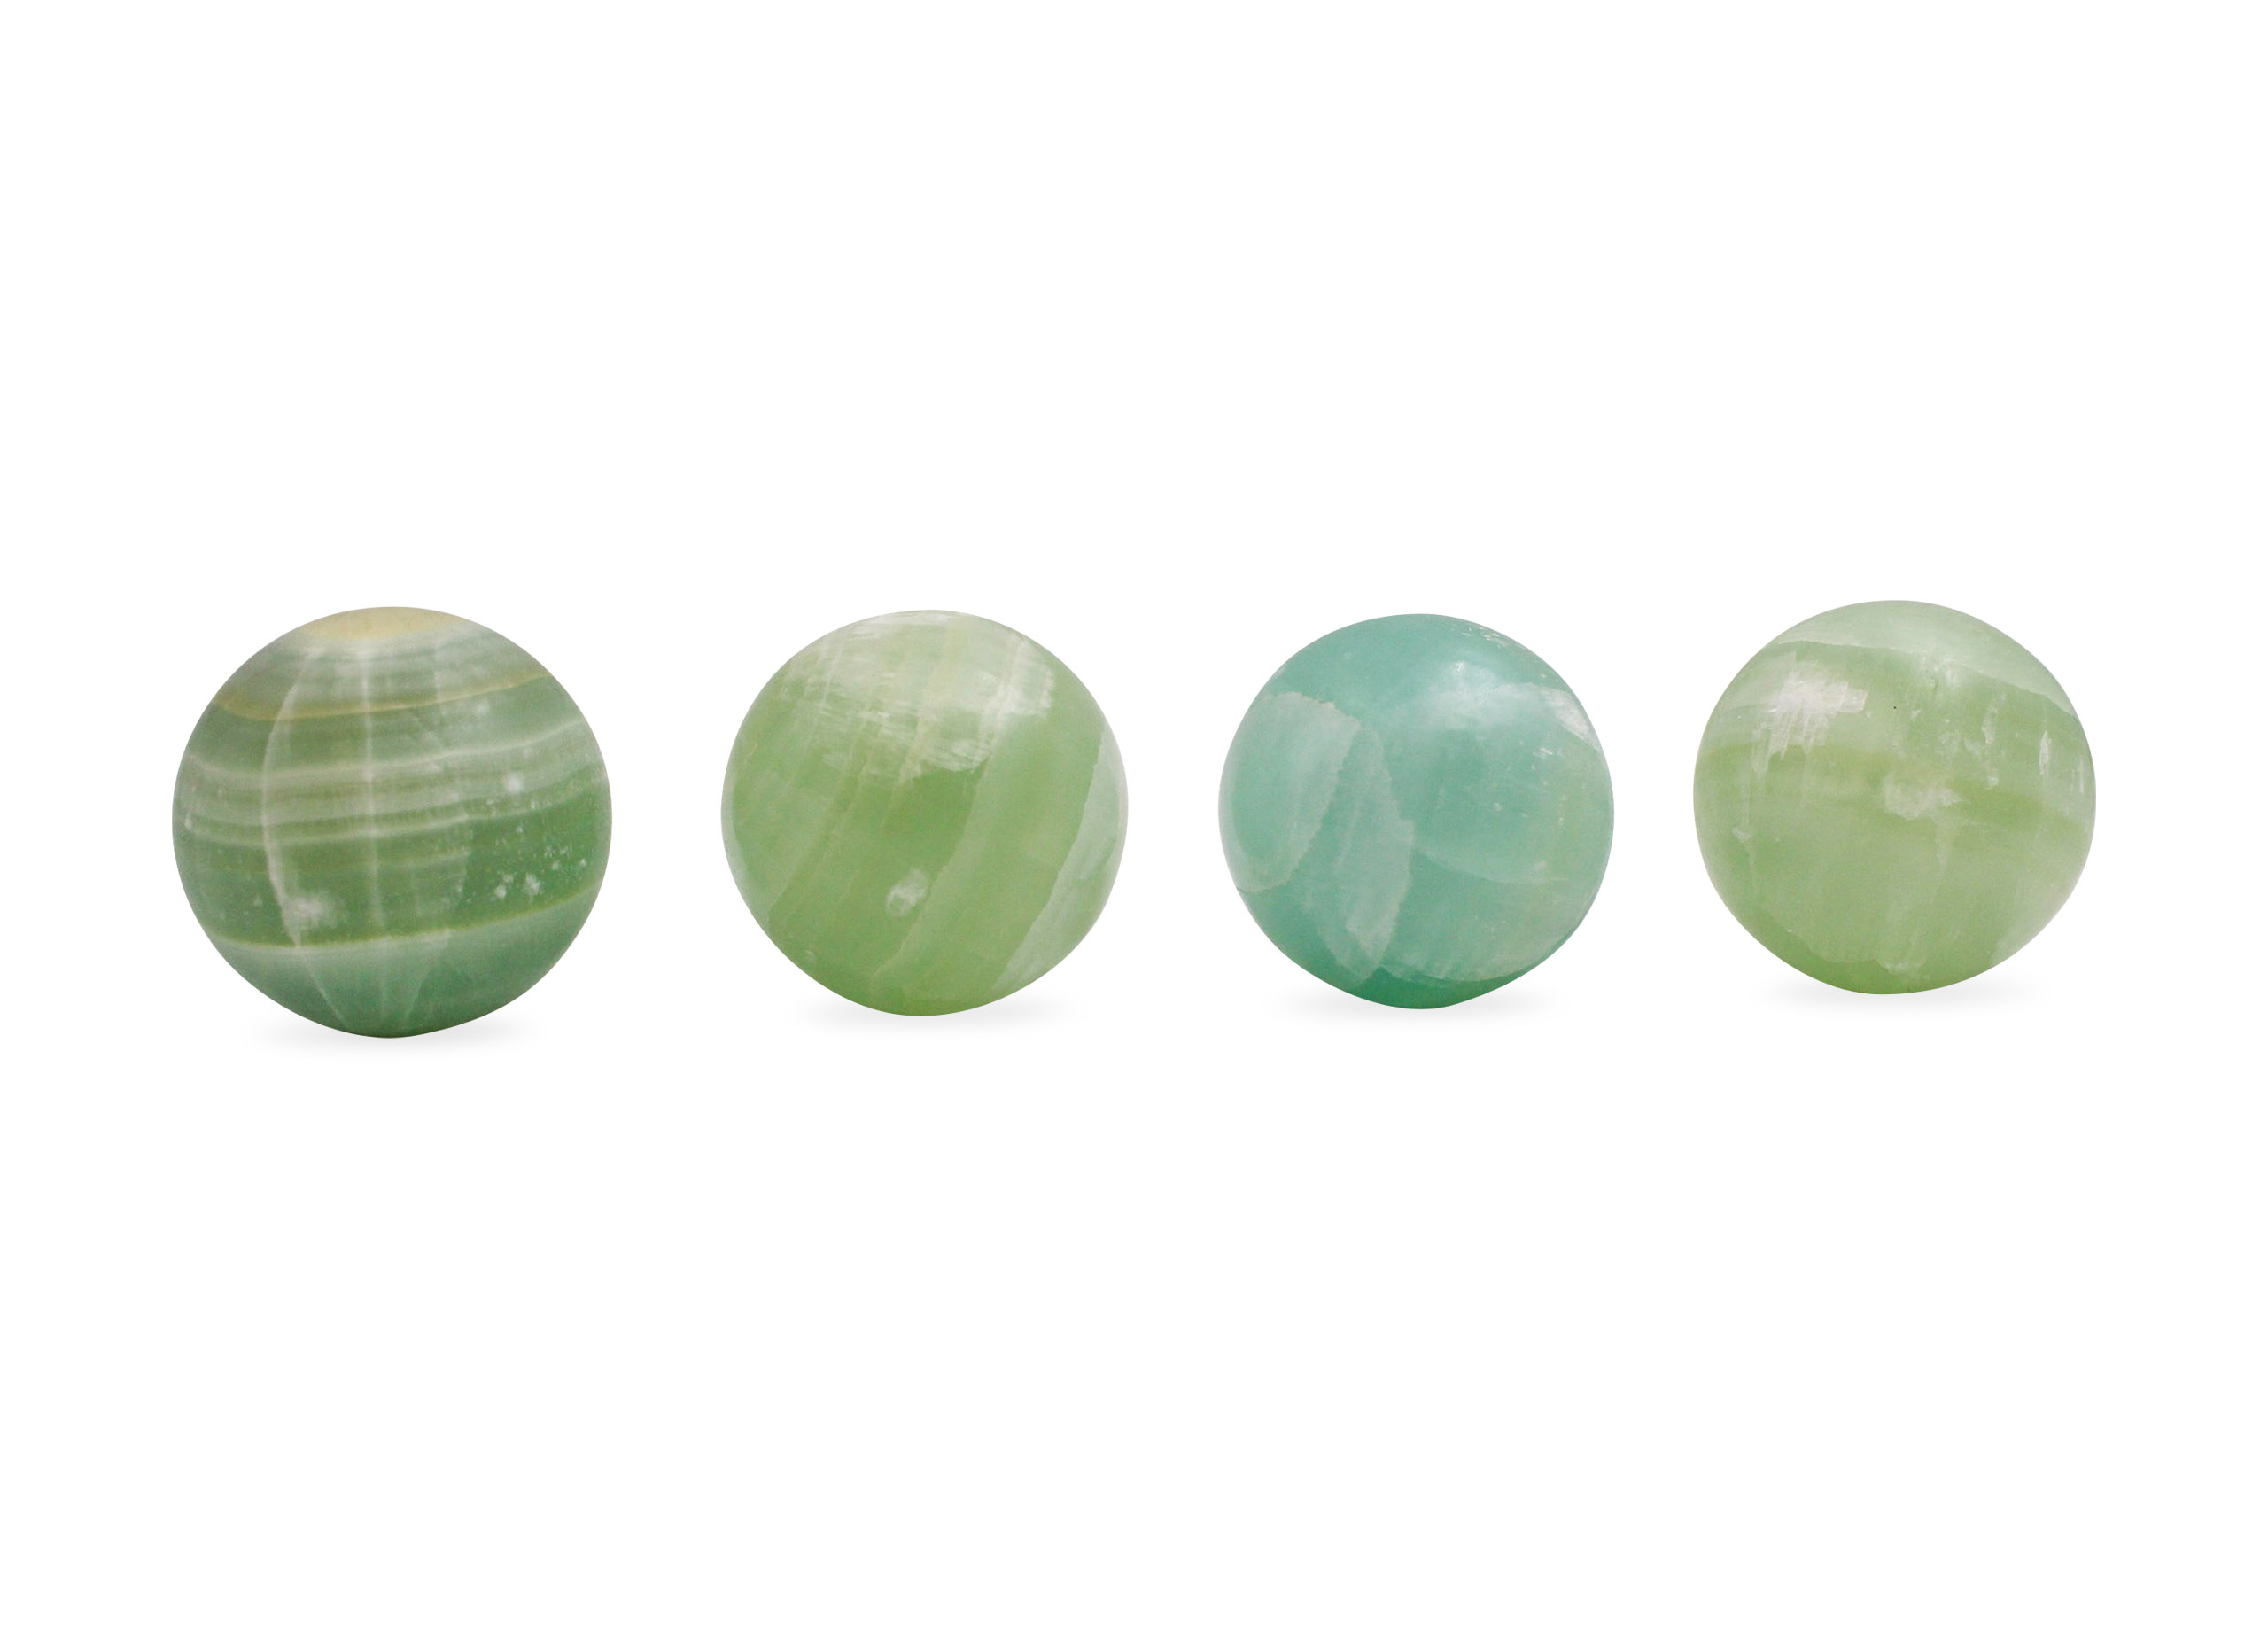 Green Pistachio Calcite Sphere - Crystal Dreams